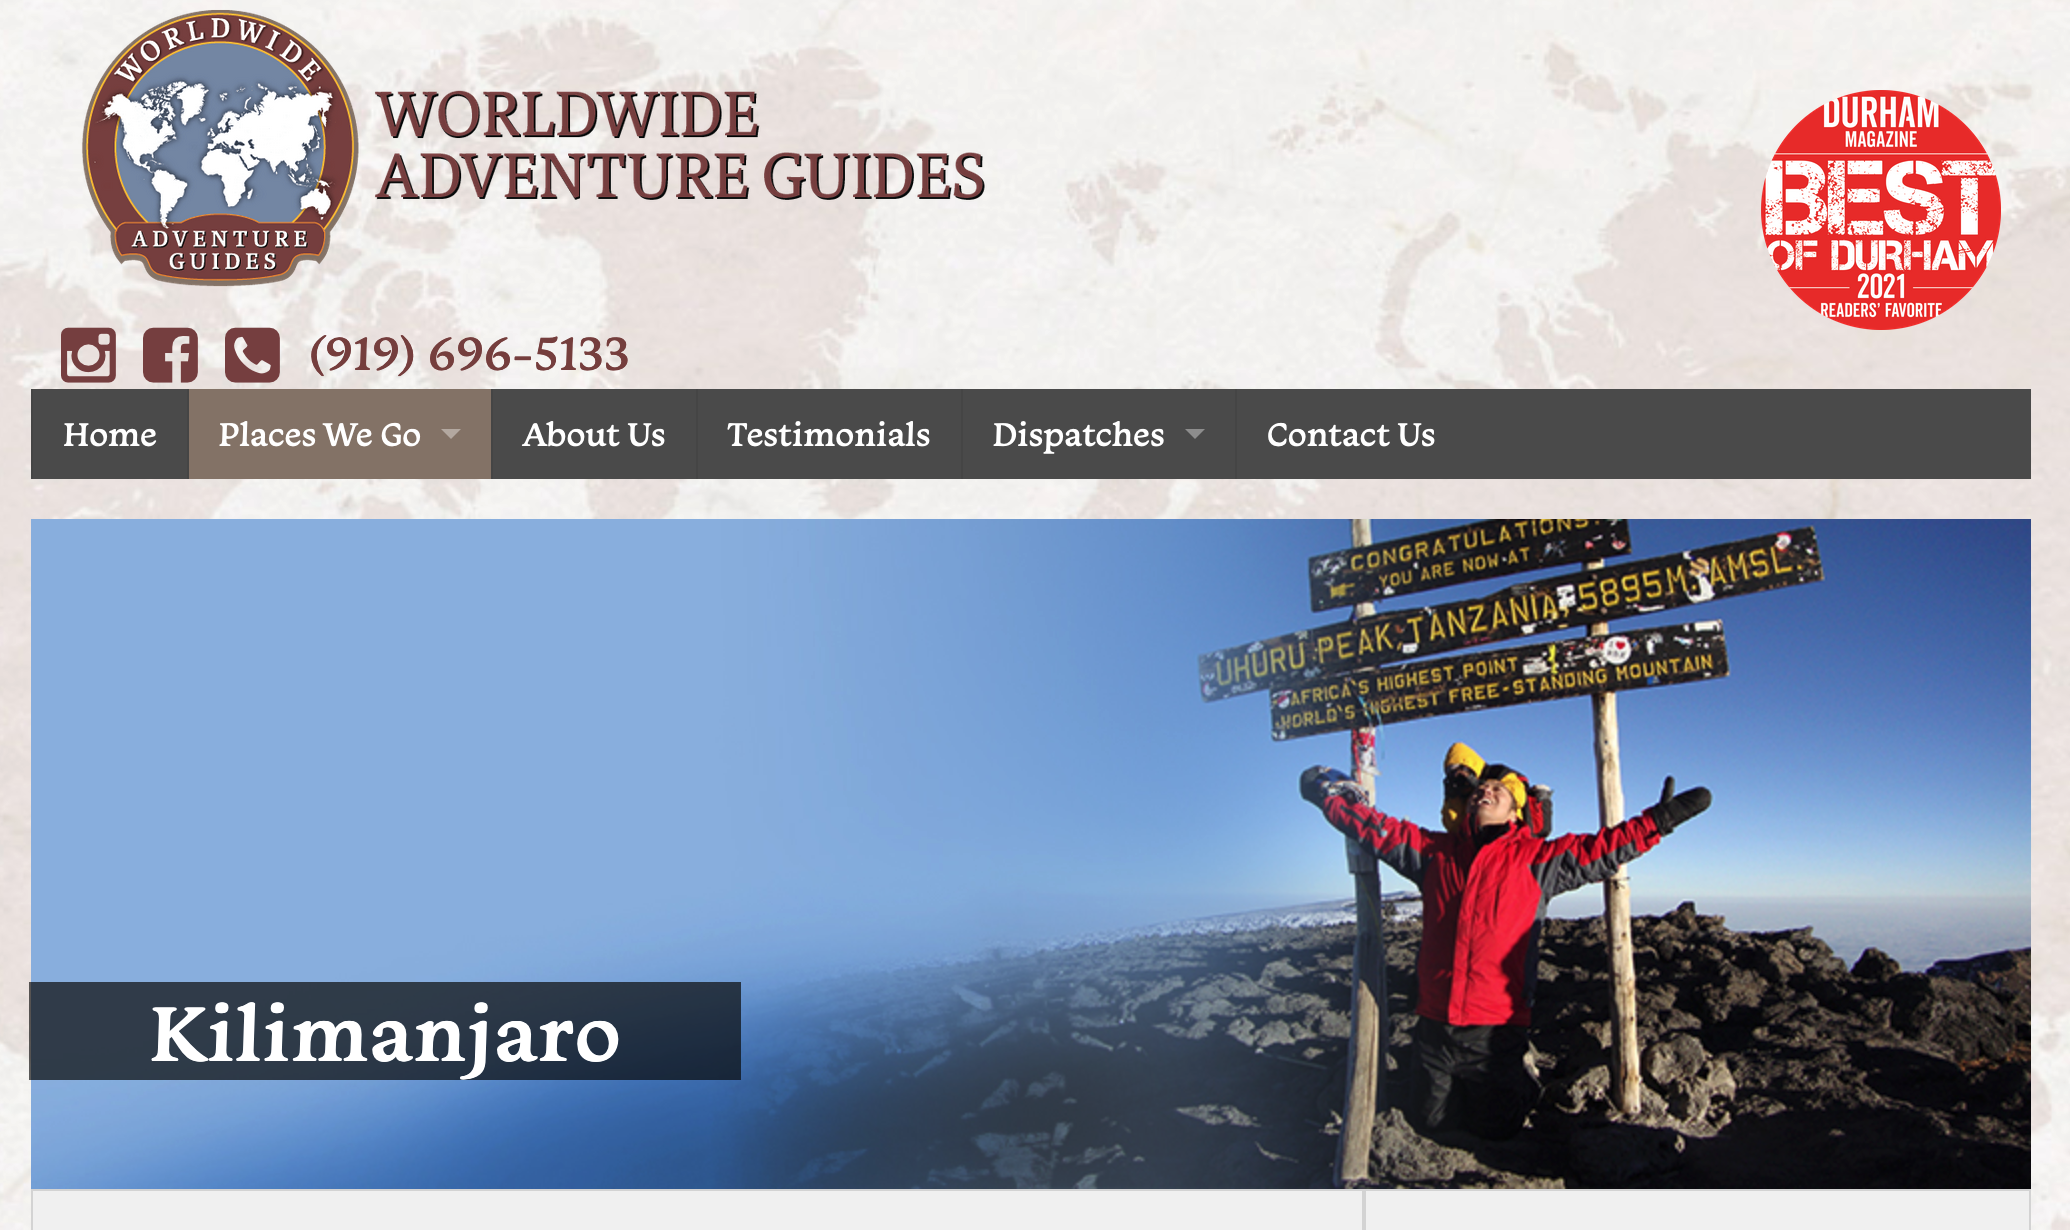 Worldwide Adventure Guides